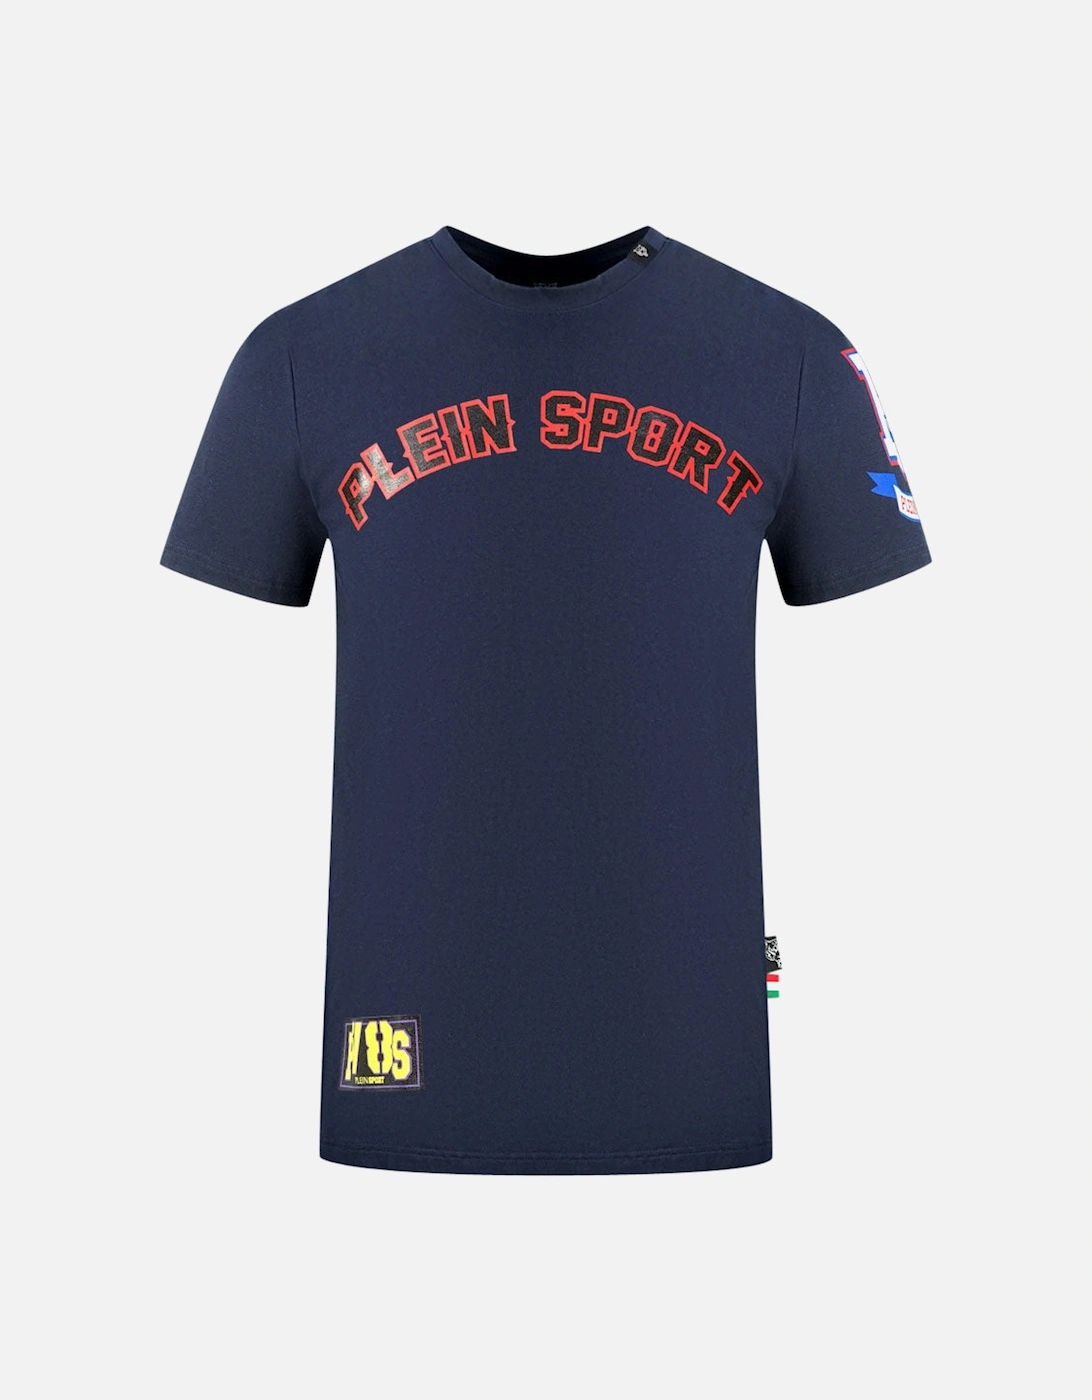 Plein Sport Multi Colour Logos Navy Blue T-Shirt, 3 of 2